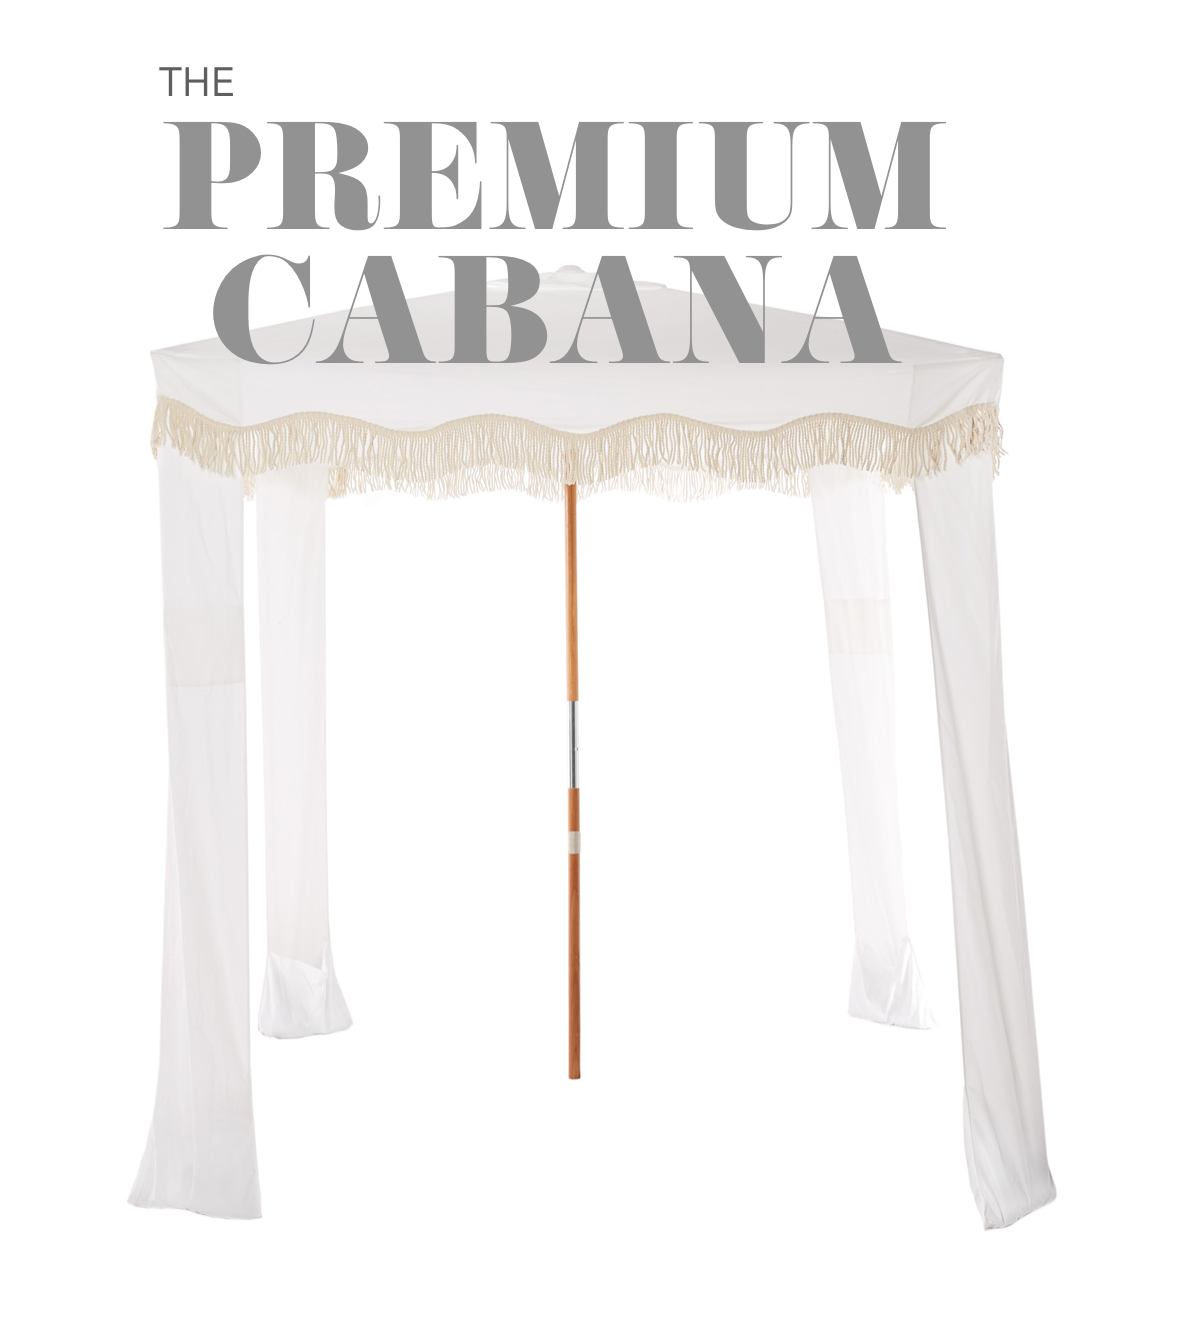 Video showing premium cabana features